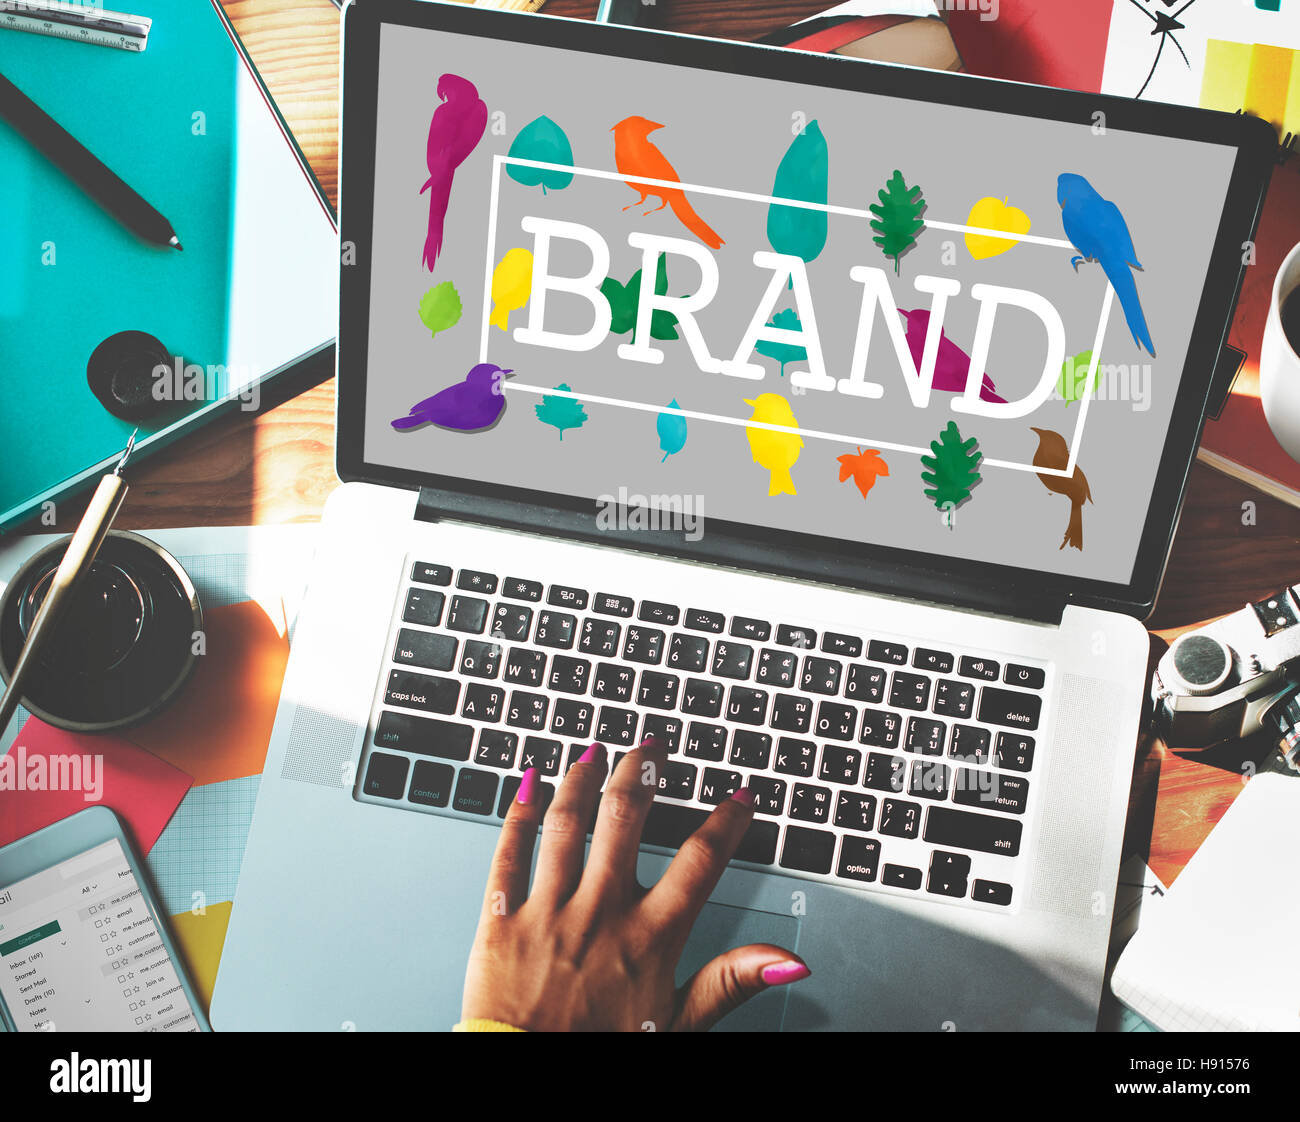 Brand Branding Trademark Logo Copyright Concept Stock Photo